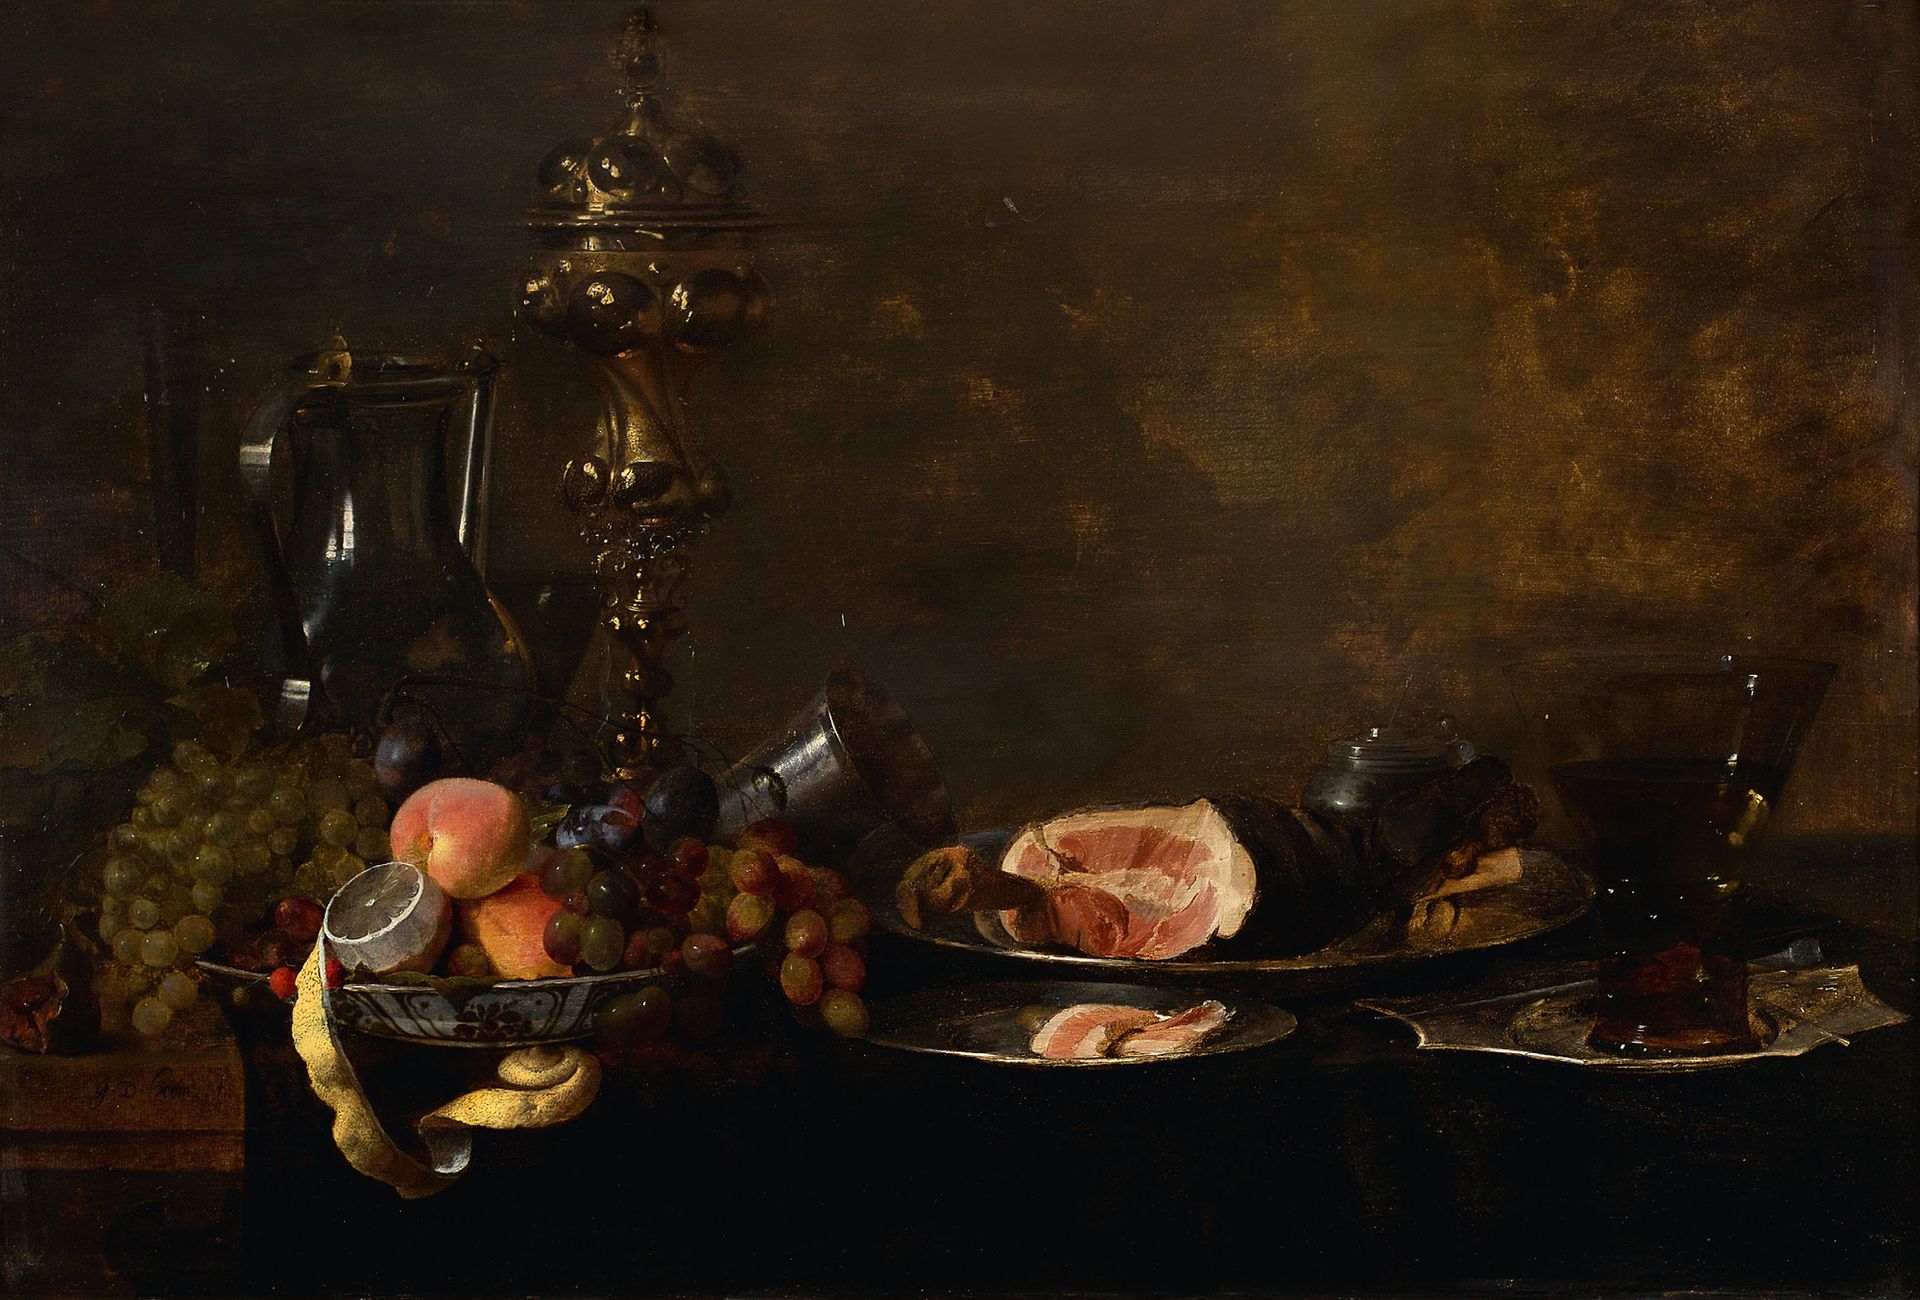 JAN DAVIDSZ. DE HEEM UTRECHT, 1606 - 1684, ANVERS 桃子、葡萄和柠檬，装在万利克拉克瓷碗里，锡制托盘上有一只火腿&hellip;